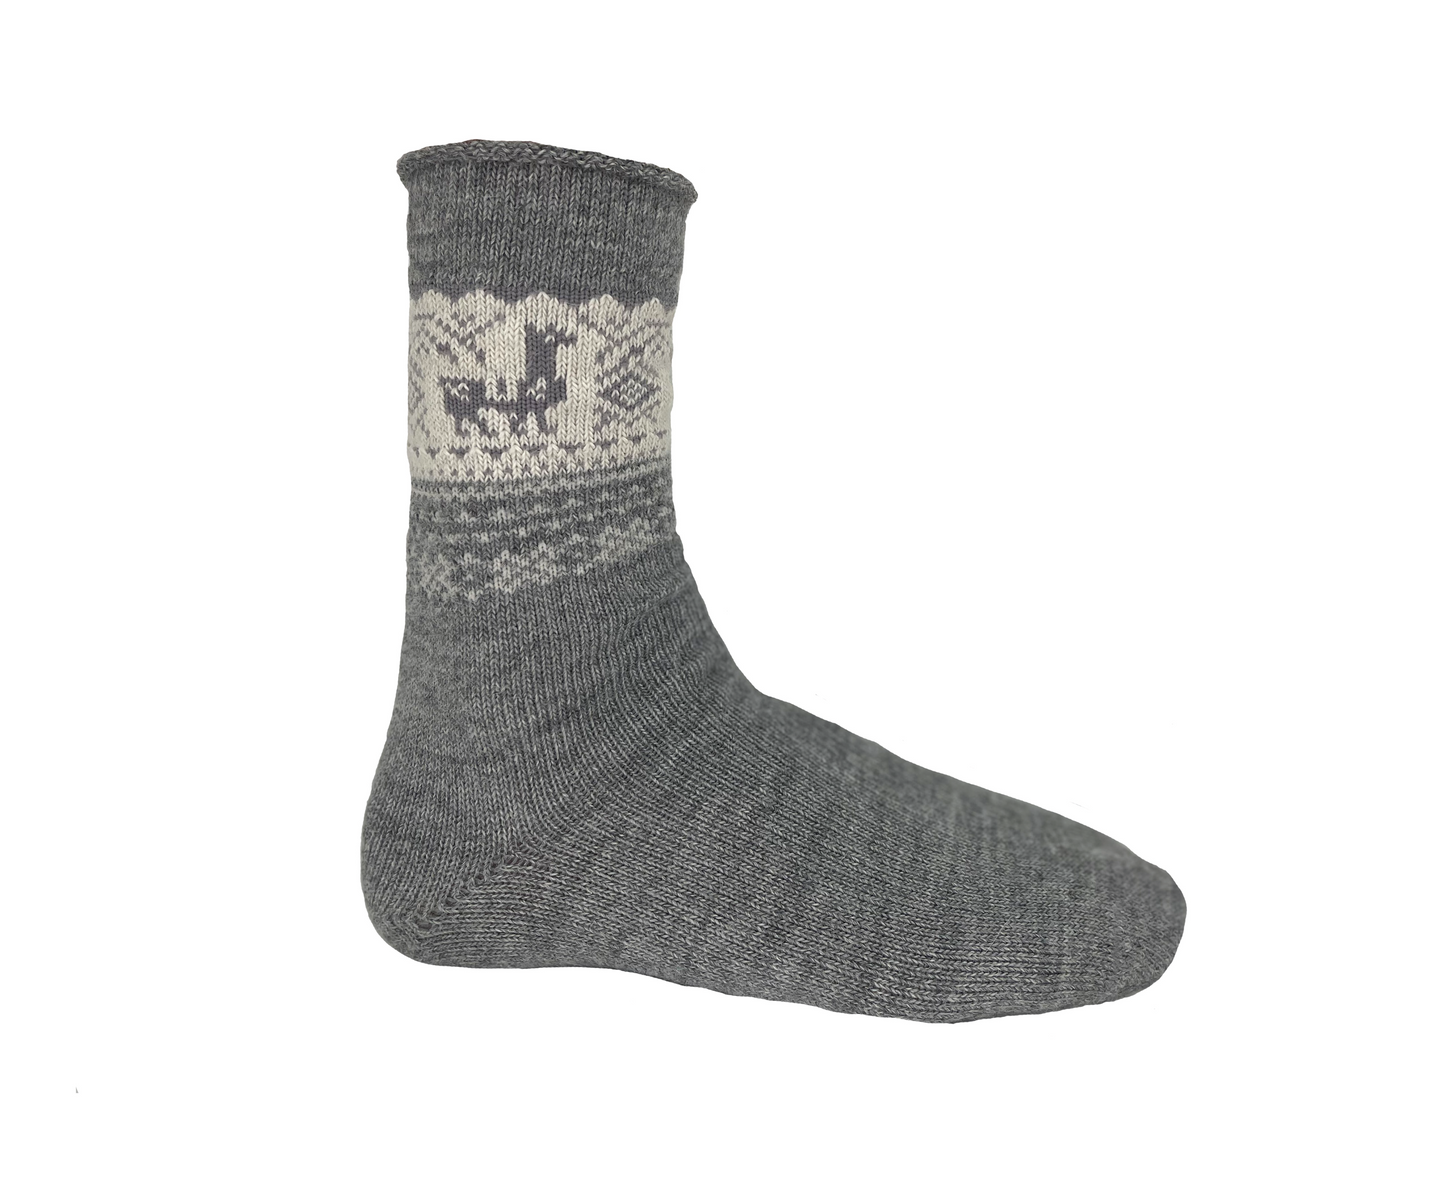 The Grey Sock